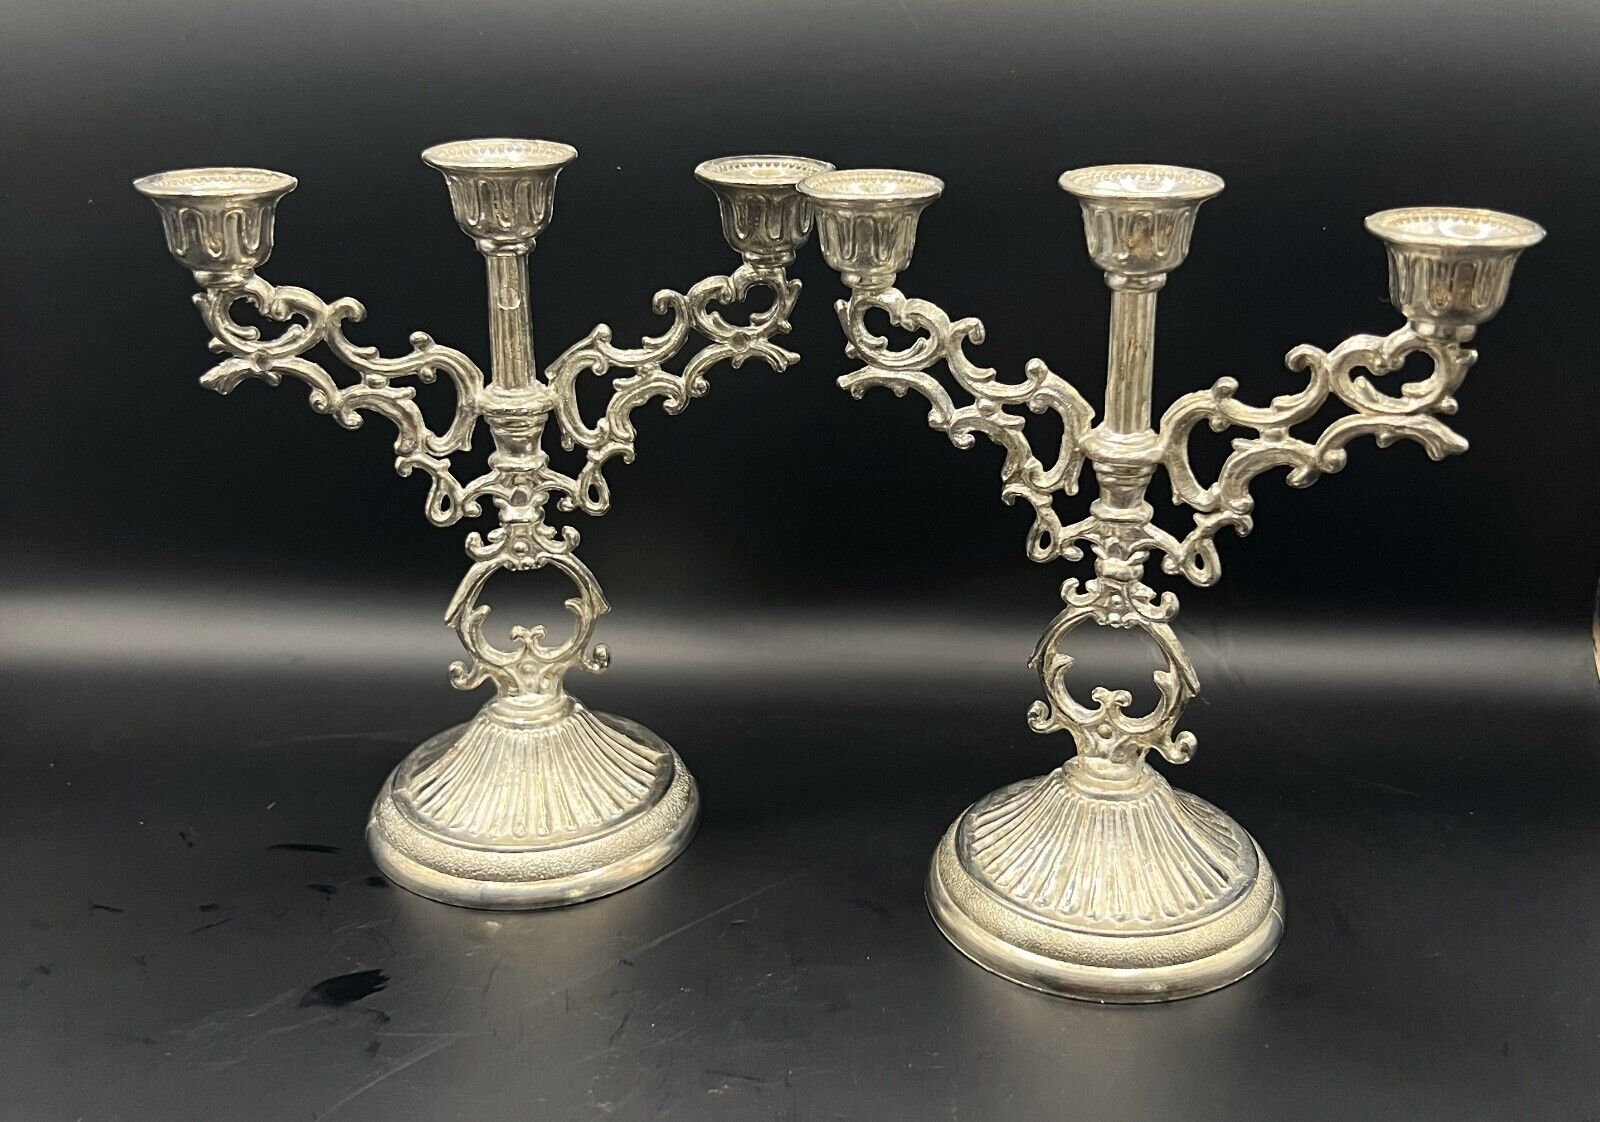 Vintage Italian Silver Candelabra, 3 Tier Ornate Filigree Candle Hold, Set of 2 